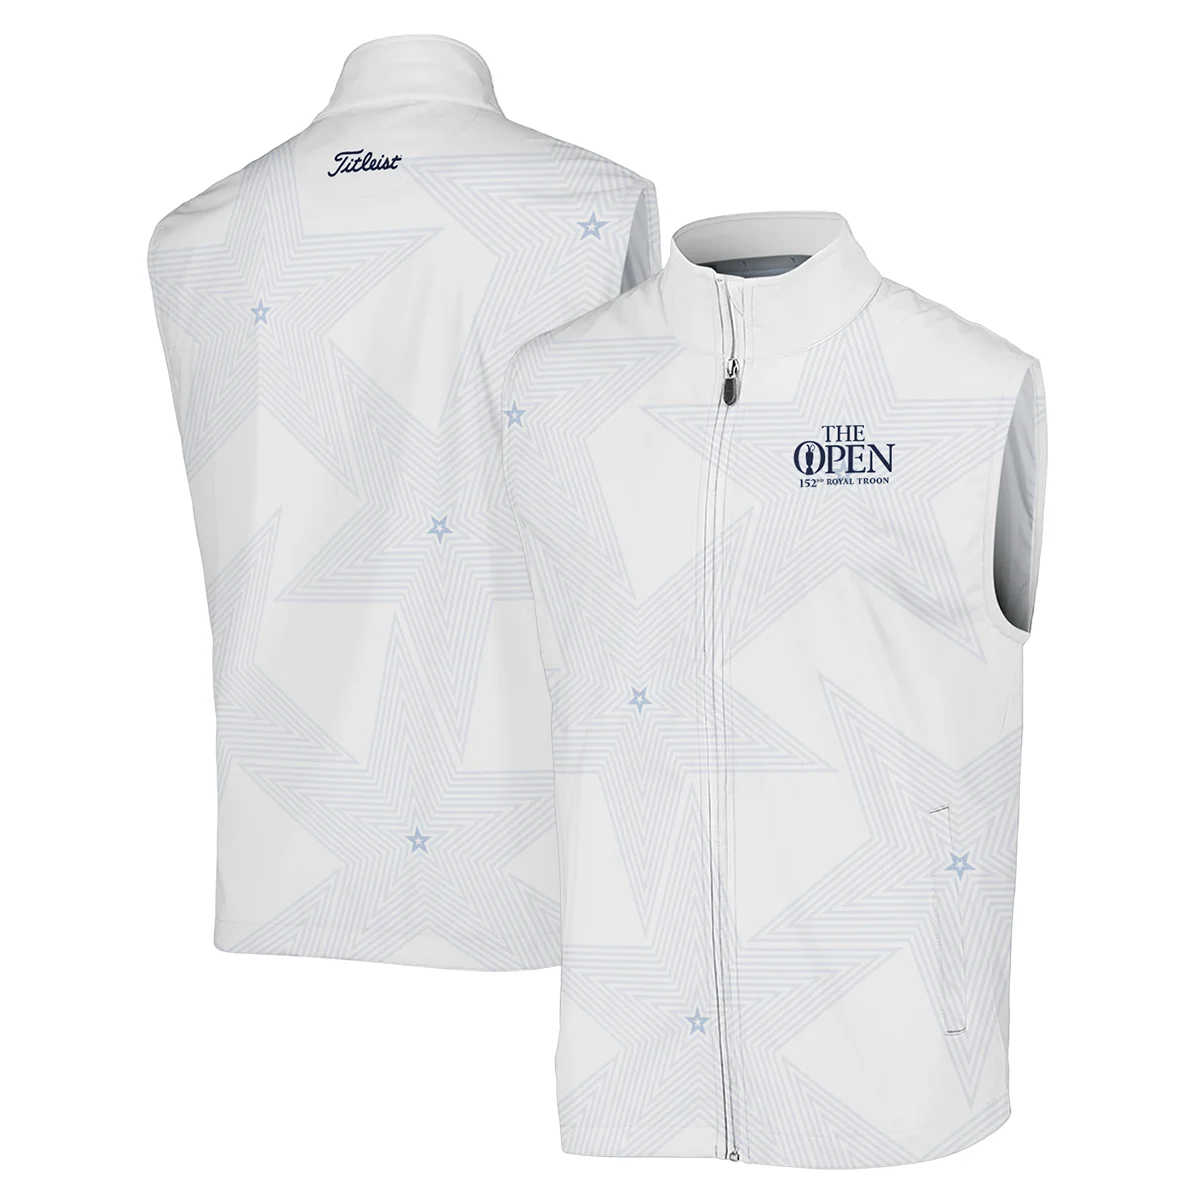 The 152nd Open Championship Golf Sport Titleist Zipper Polo Shirt Sports Star Sripe White Navy Zipper Polo Shirt For Men